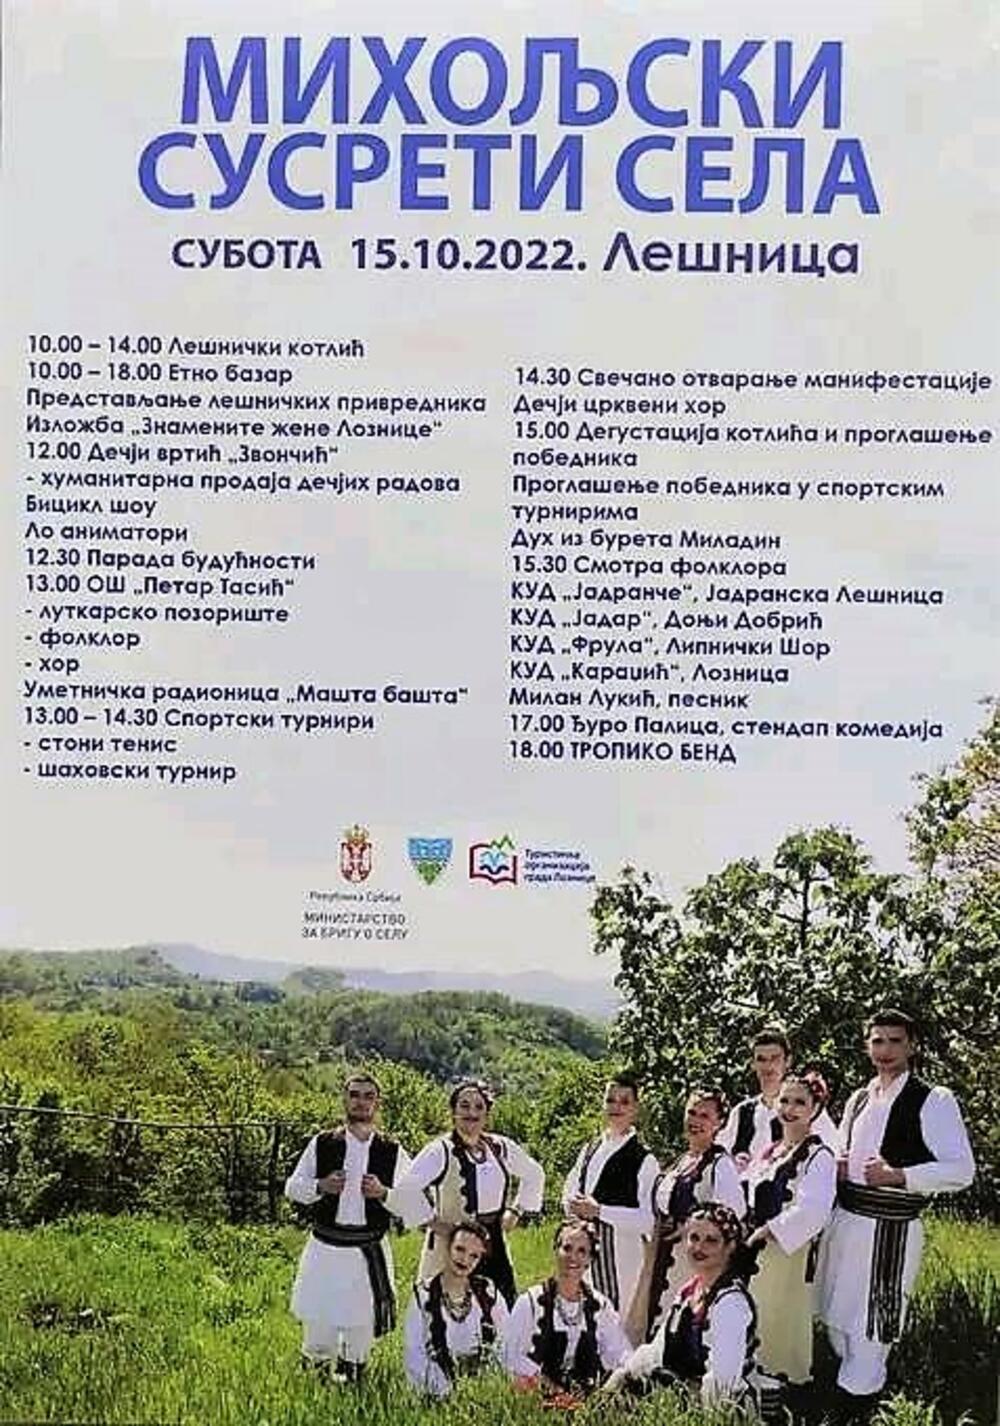 Miholjski susreti sela, Lešnica